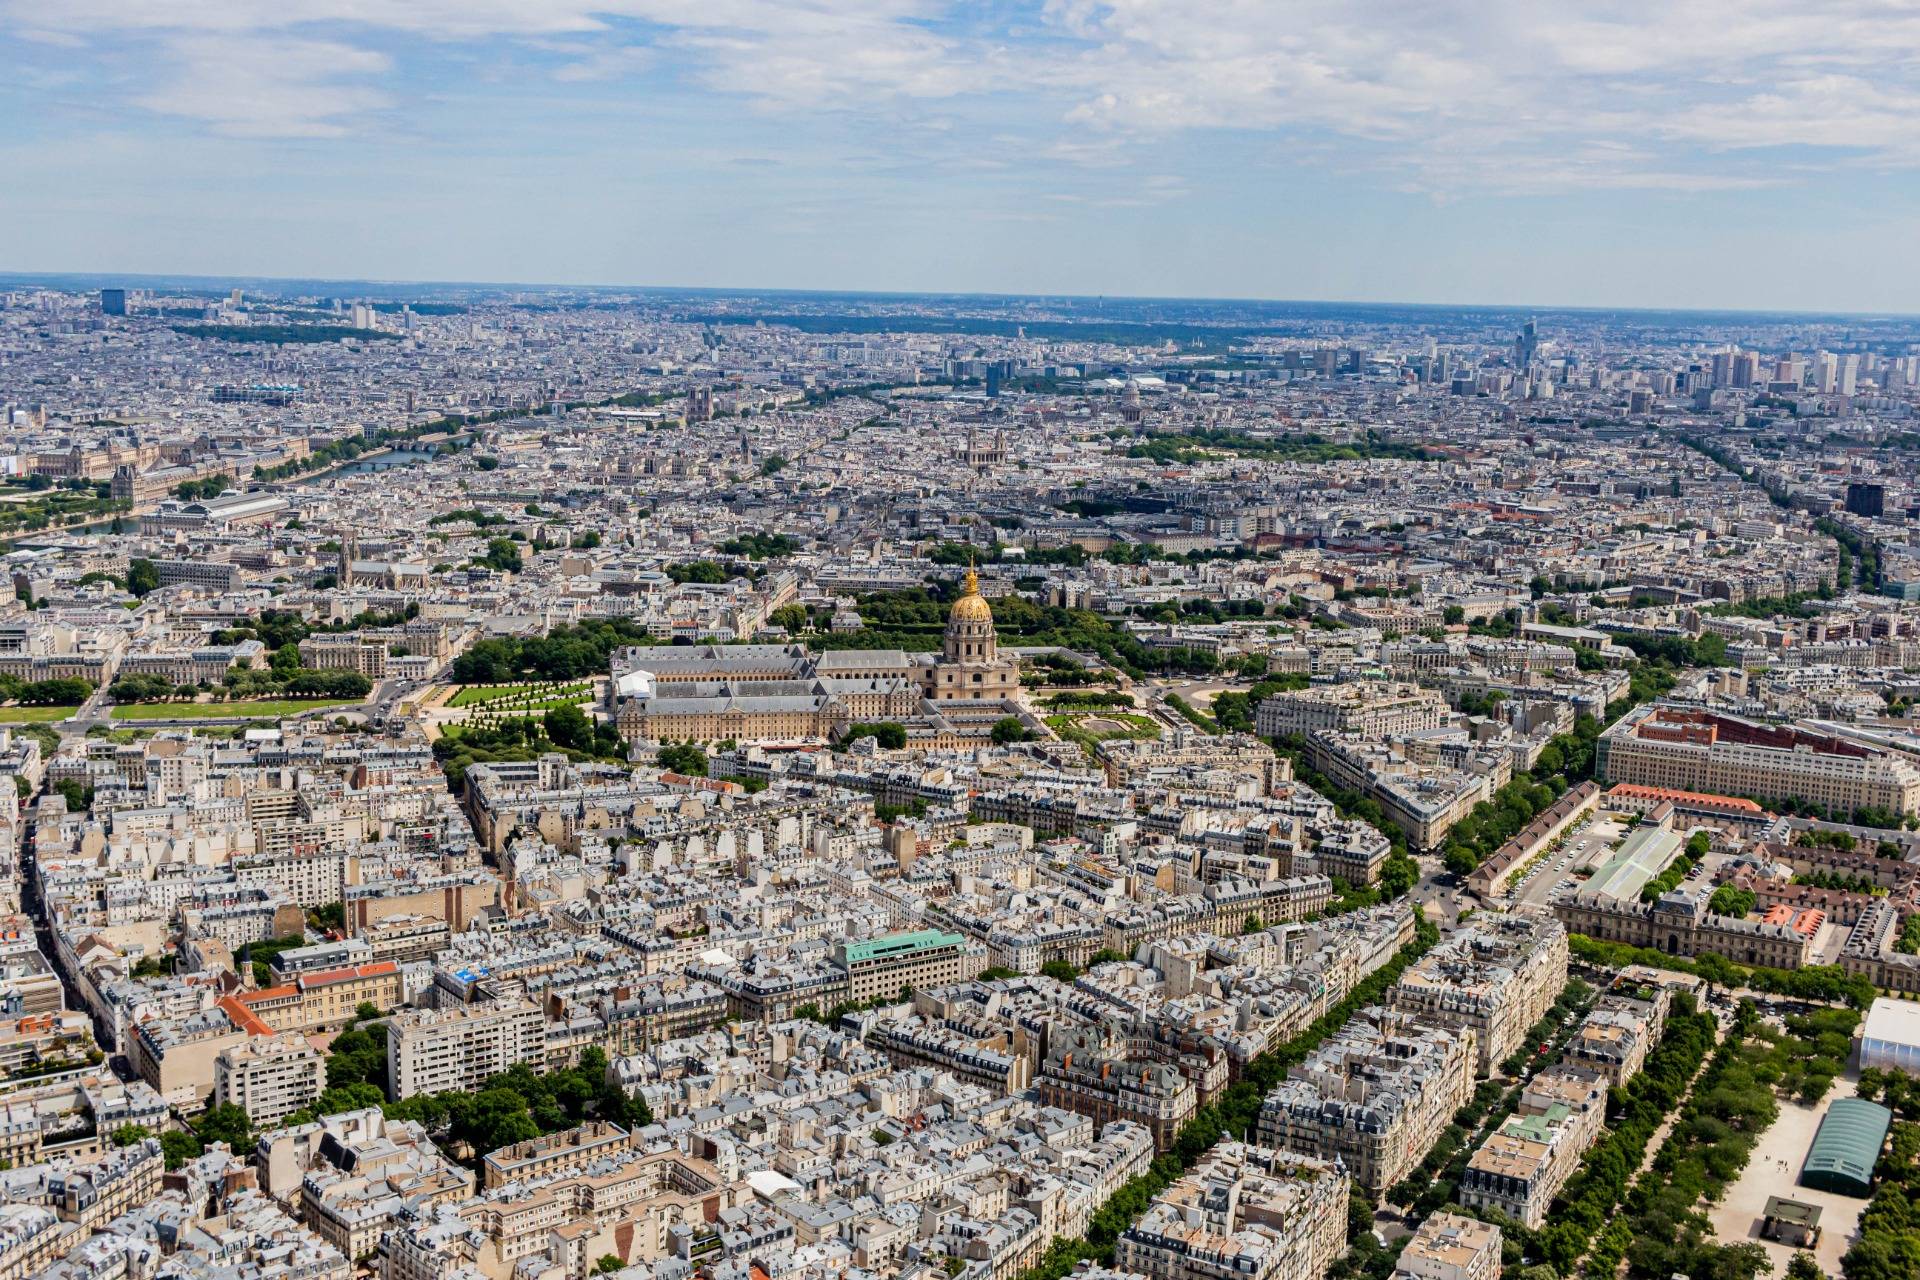 What can be seen from the top of the Eiffel Tower/Co można zobaczyć ze szczytu wieży Eiffla[ENG/PL]